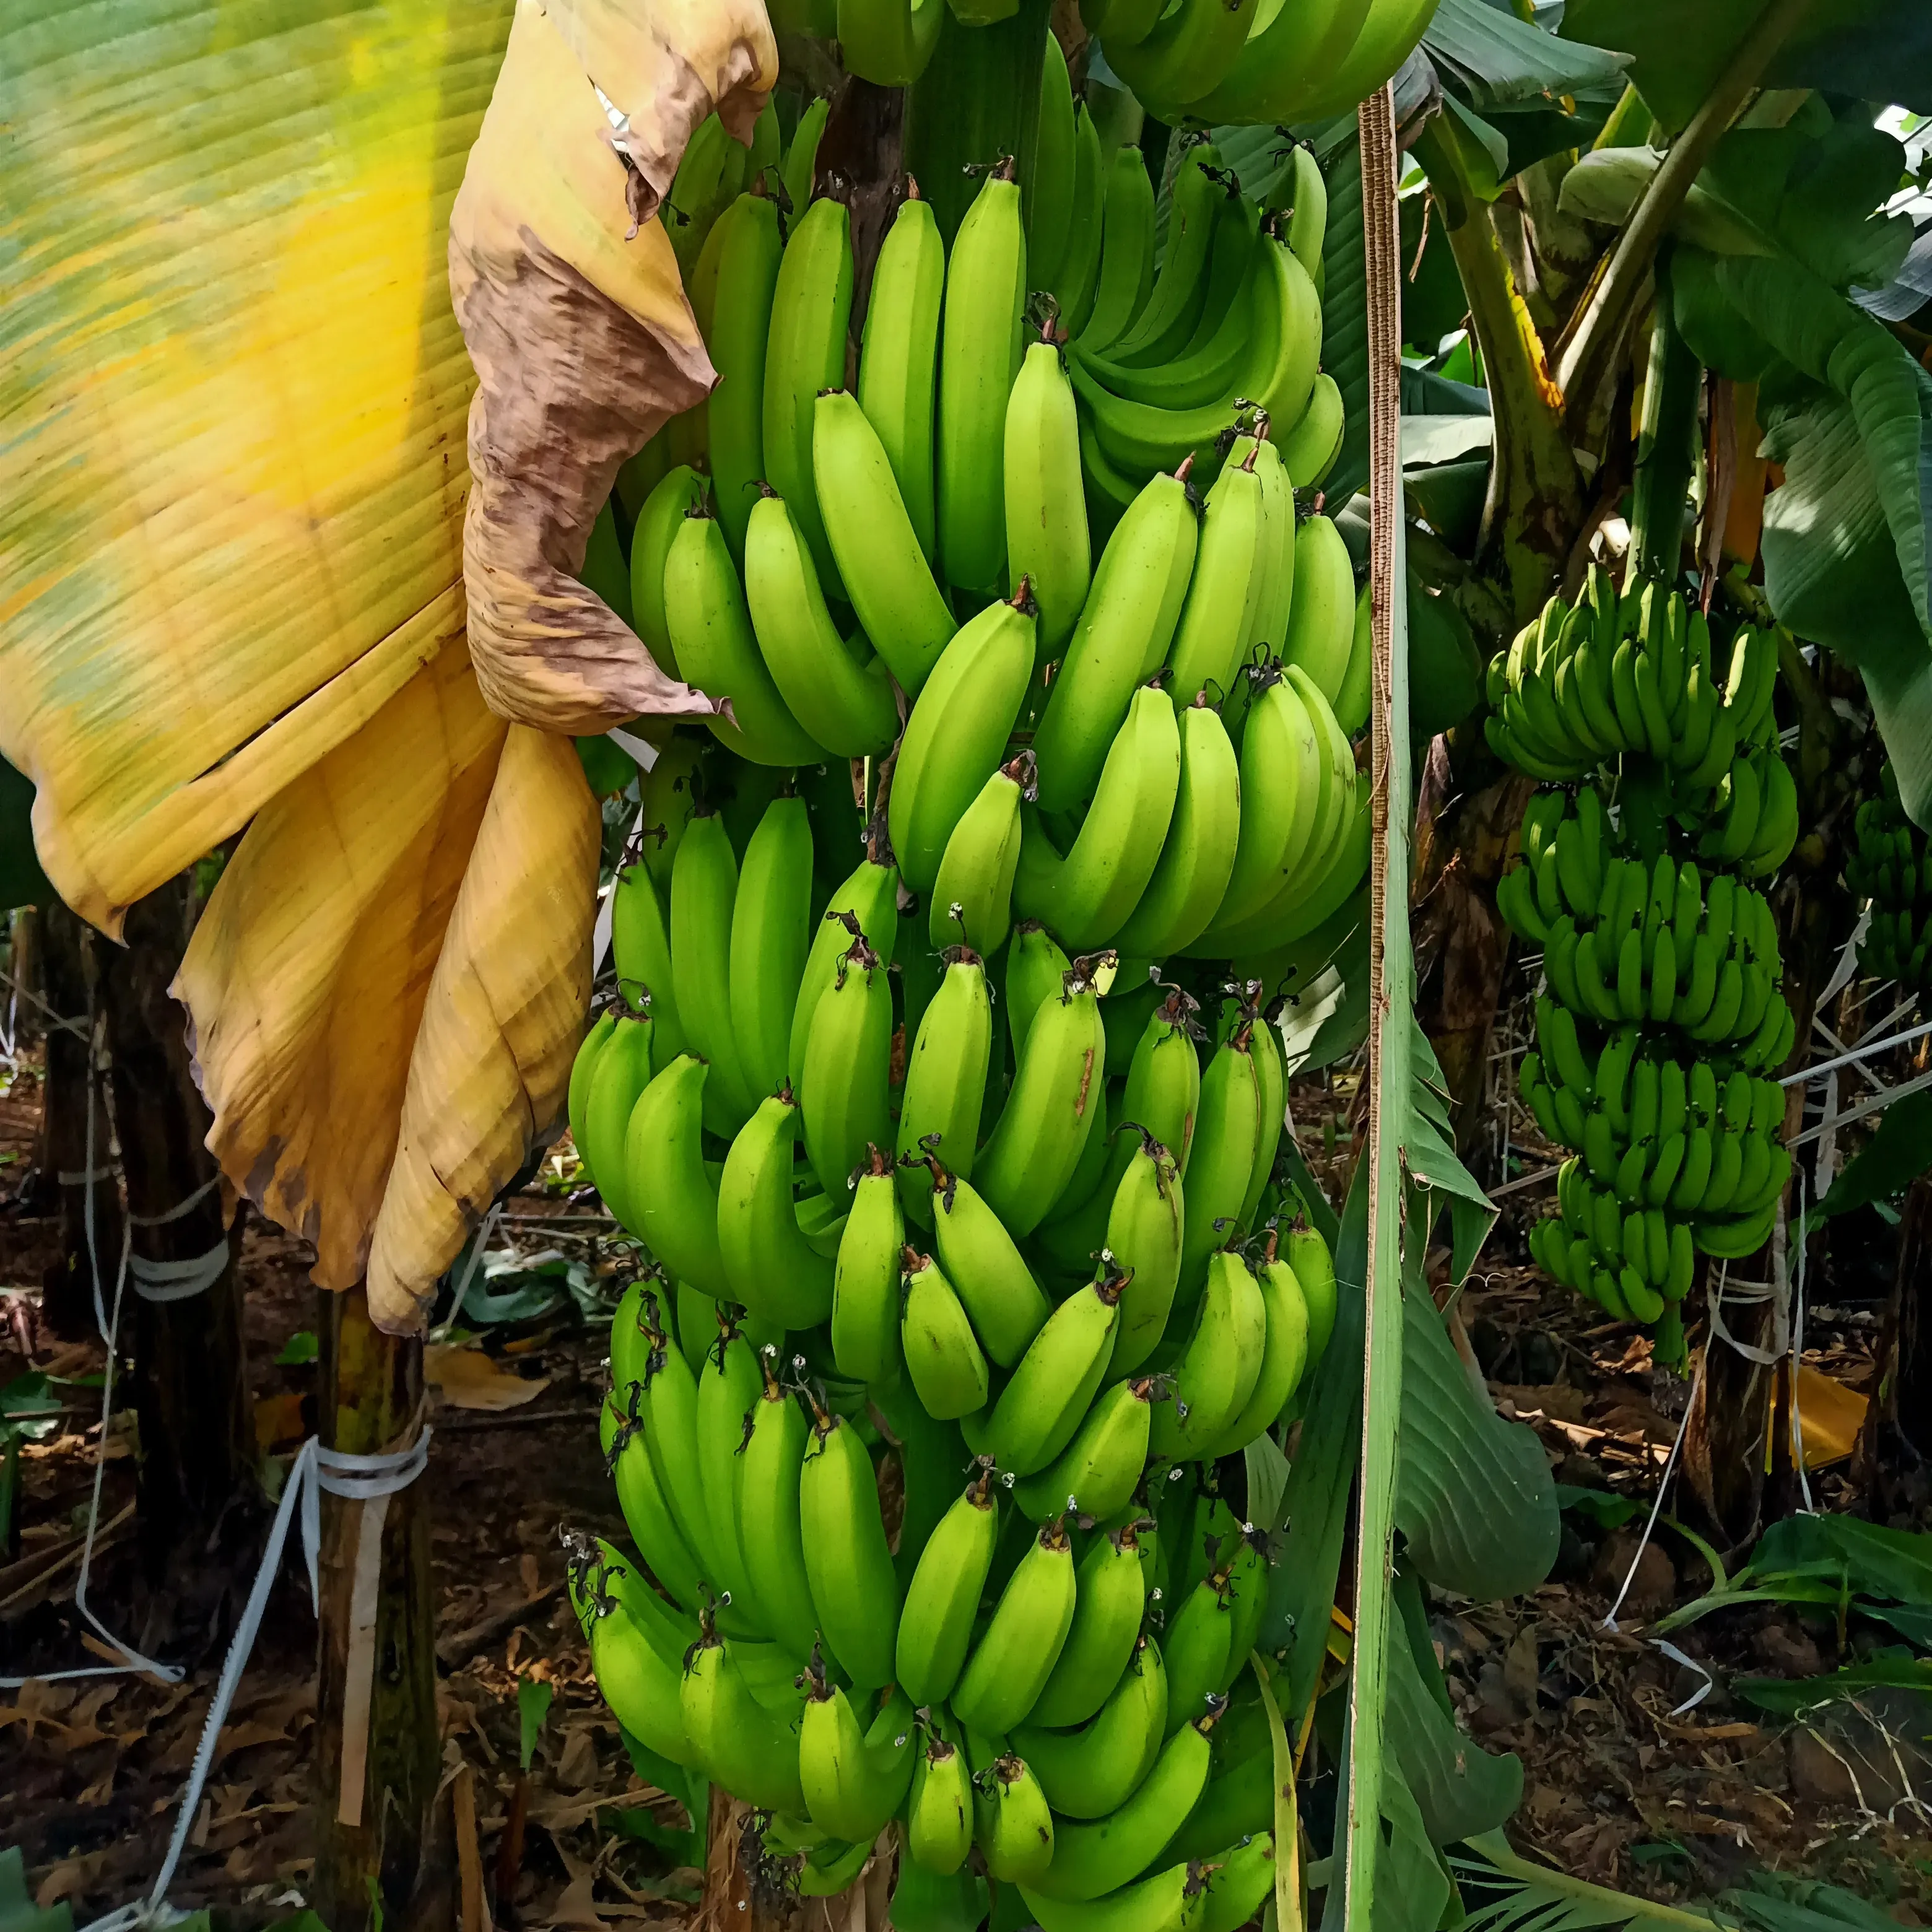 Intero pezzo di banane fresche banane fresche lunghe banane vietnamite fresche cavendish new crop